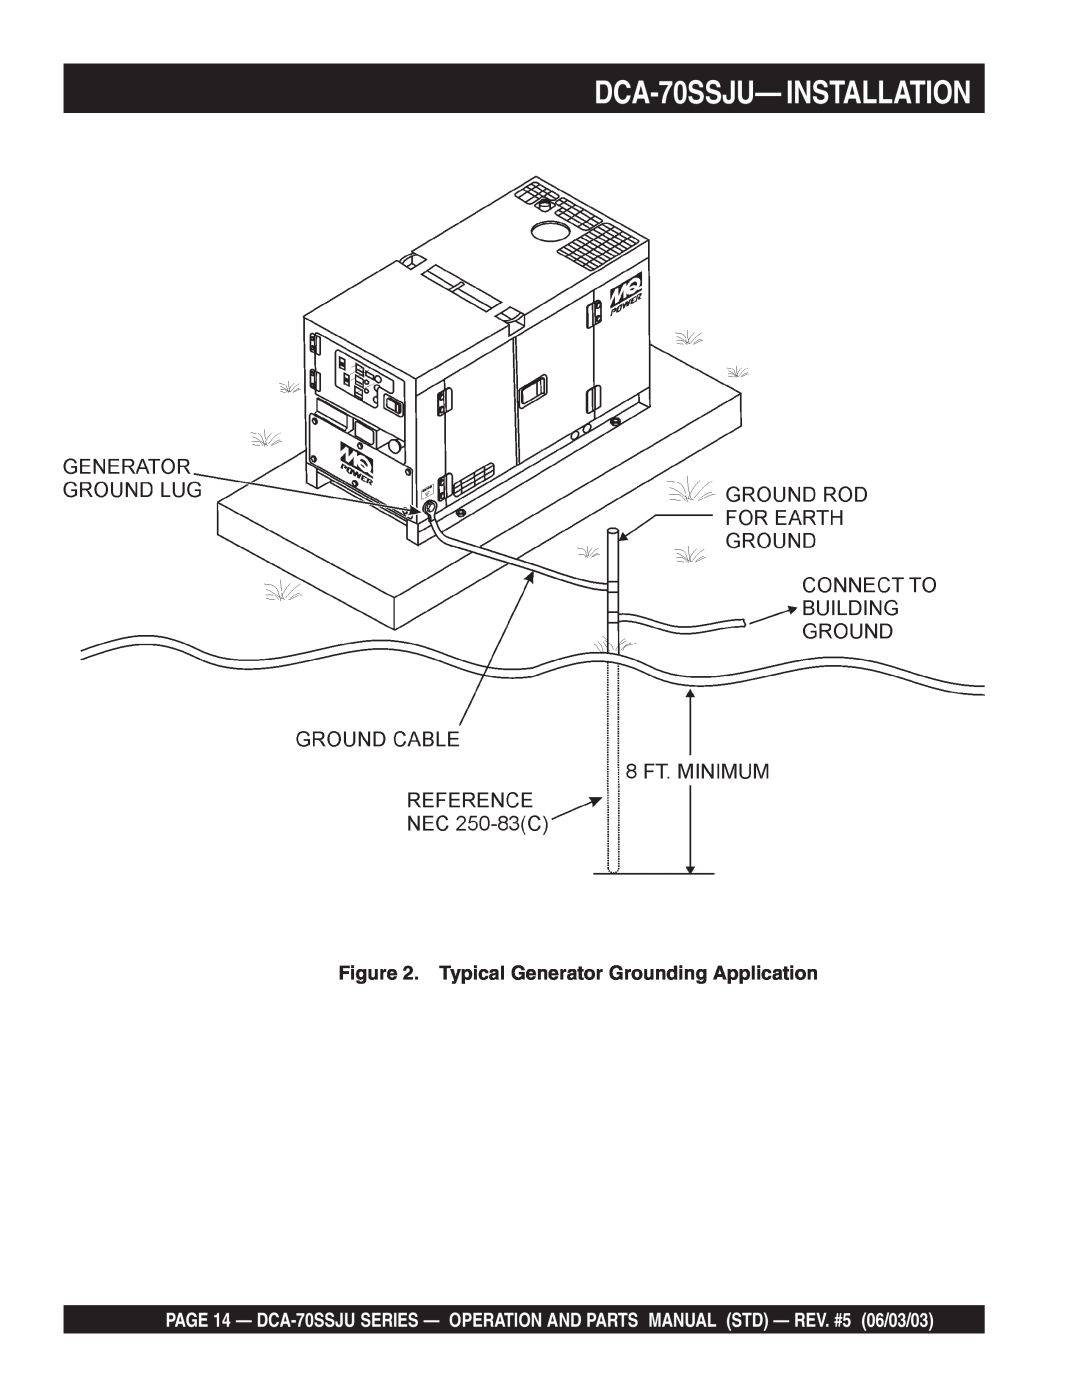 Multiquip operation manual DCA-70SSJU—INSTALLATION, Typical Generator Grounding Application 